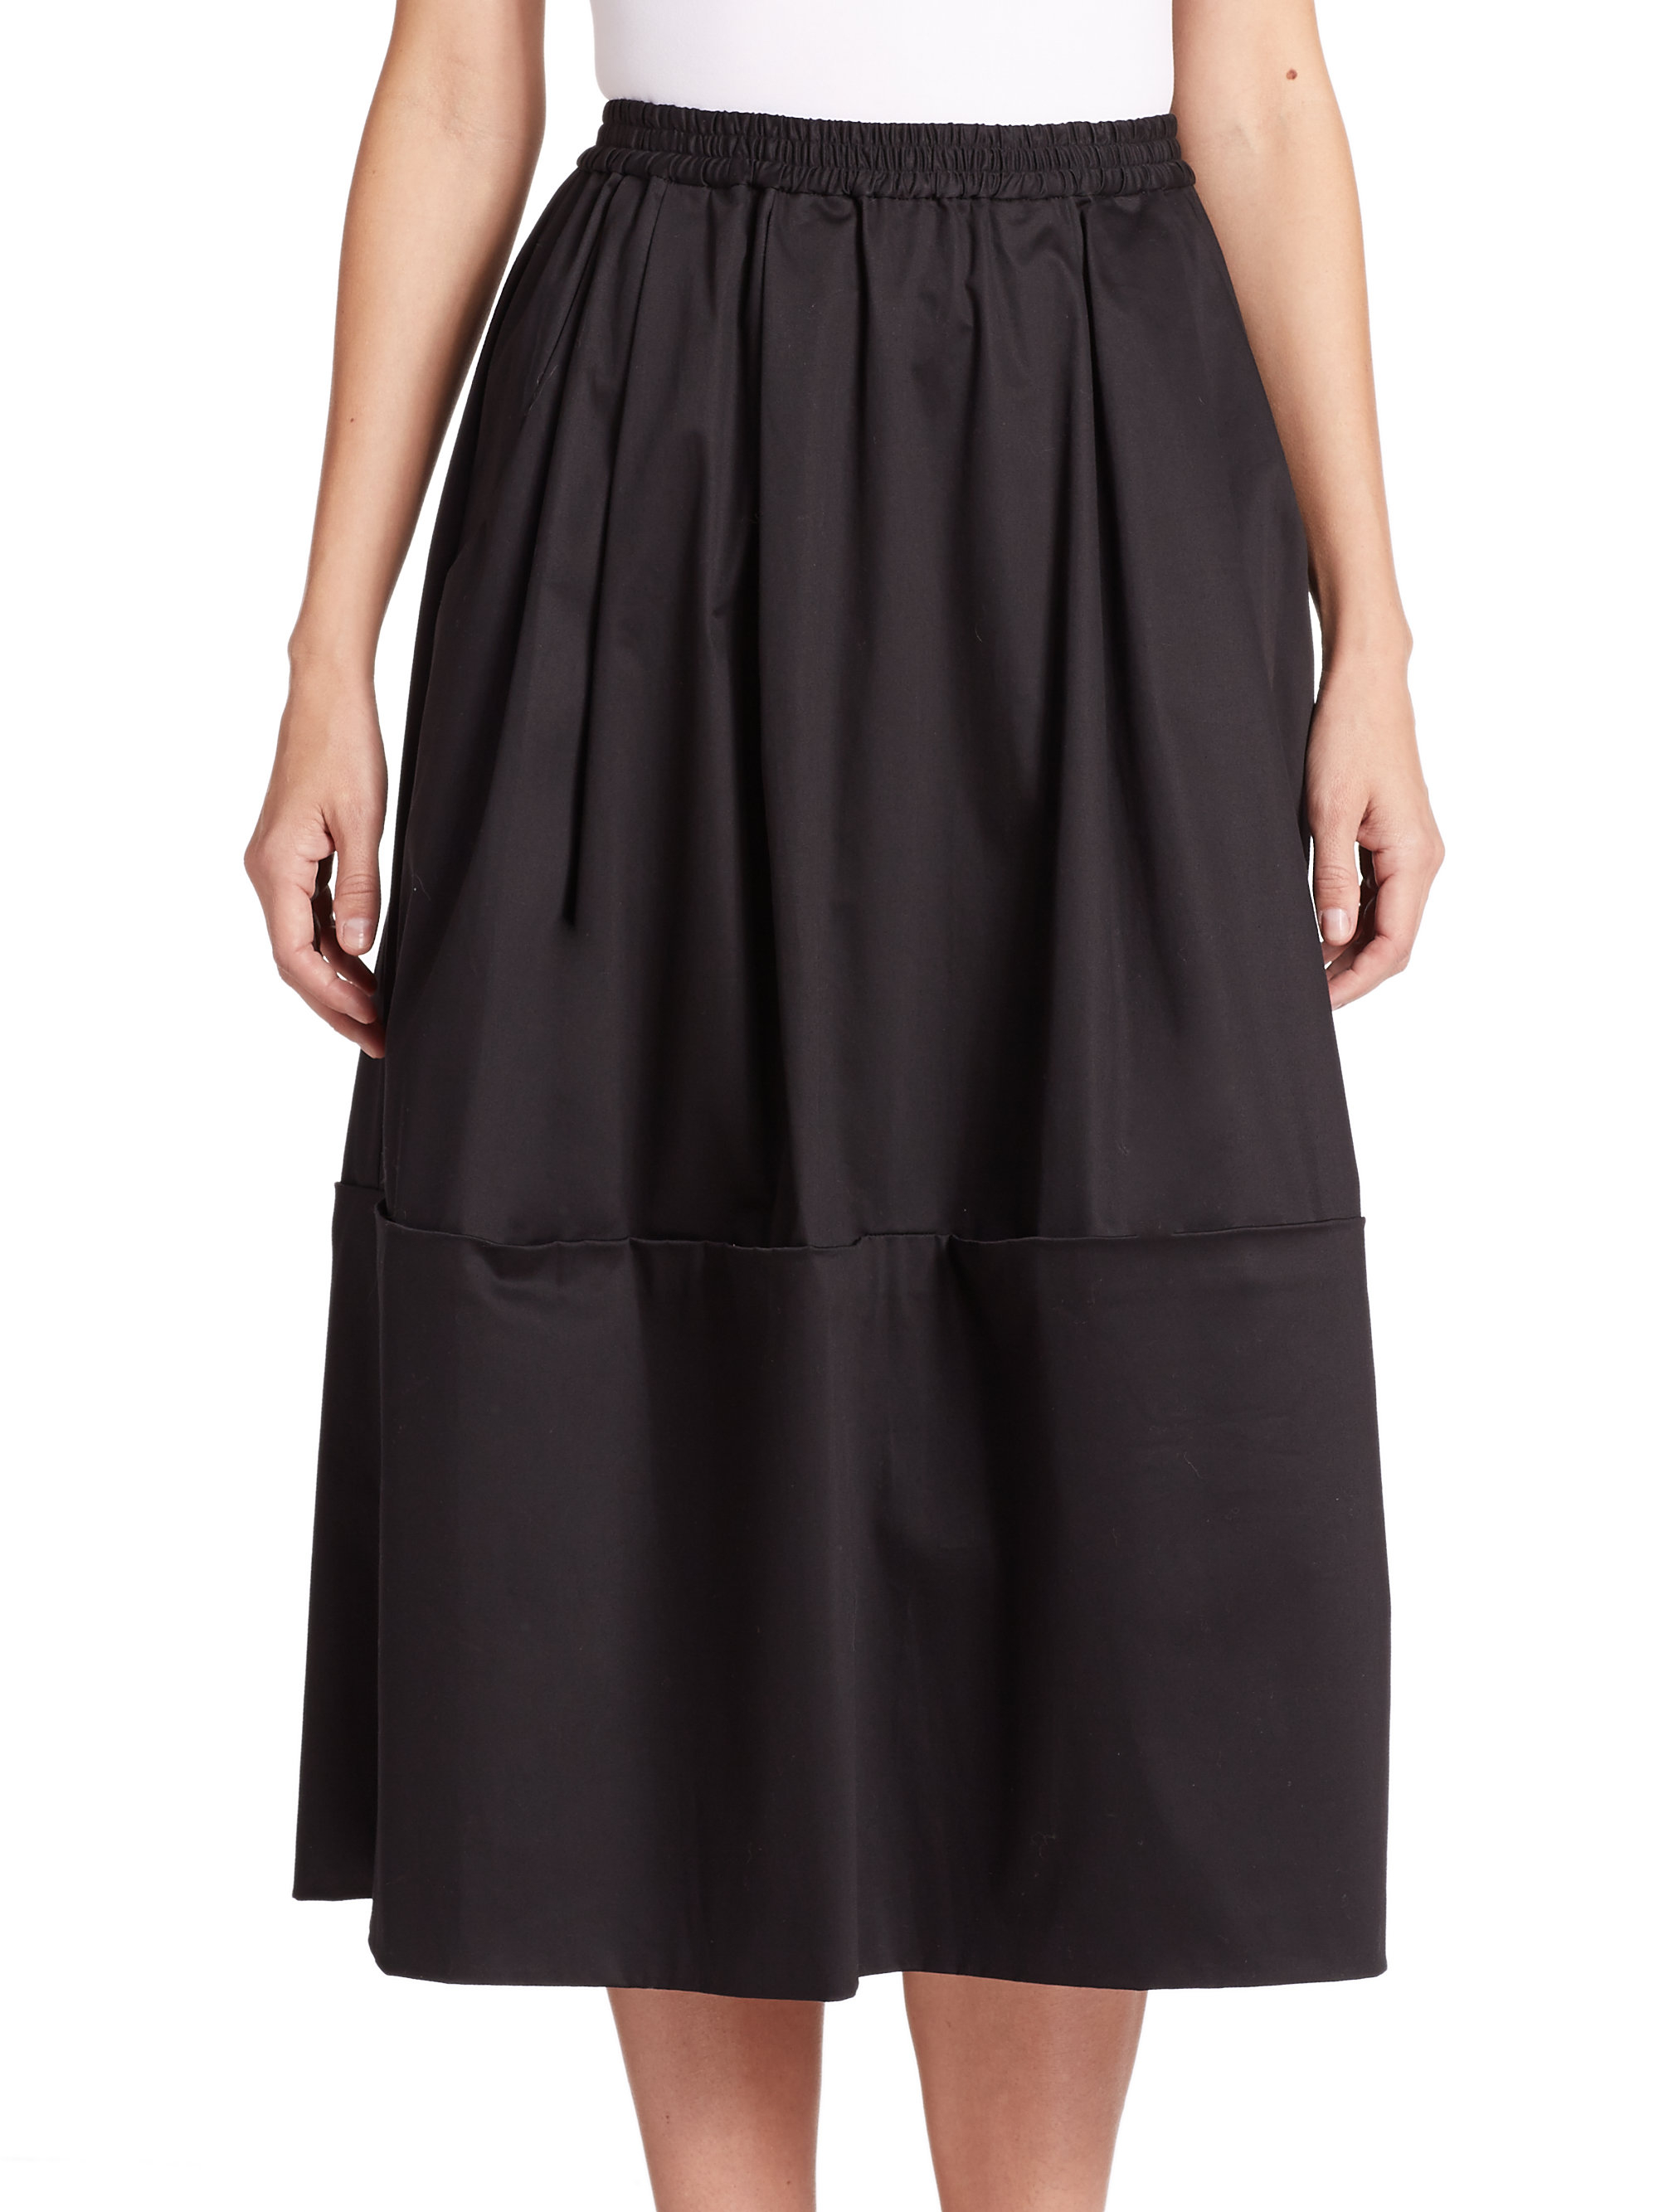 Lyst - Tome Cotton Sateen Dirndl Skirt in Black